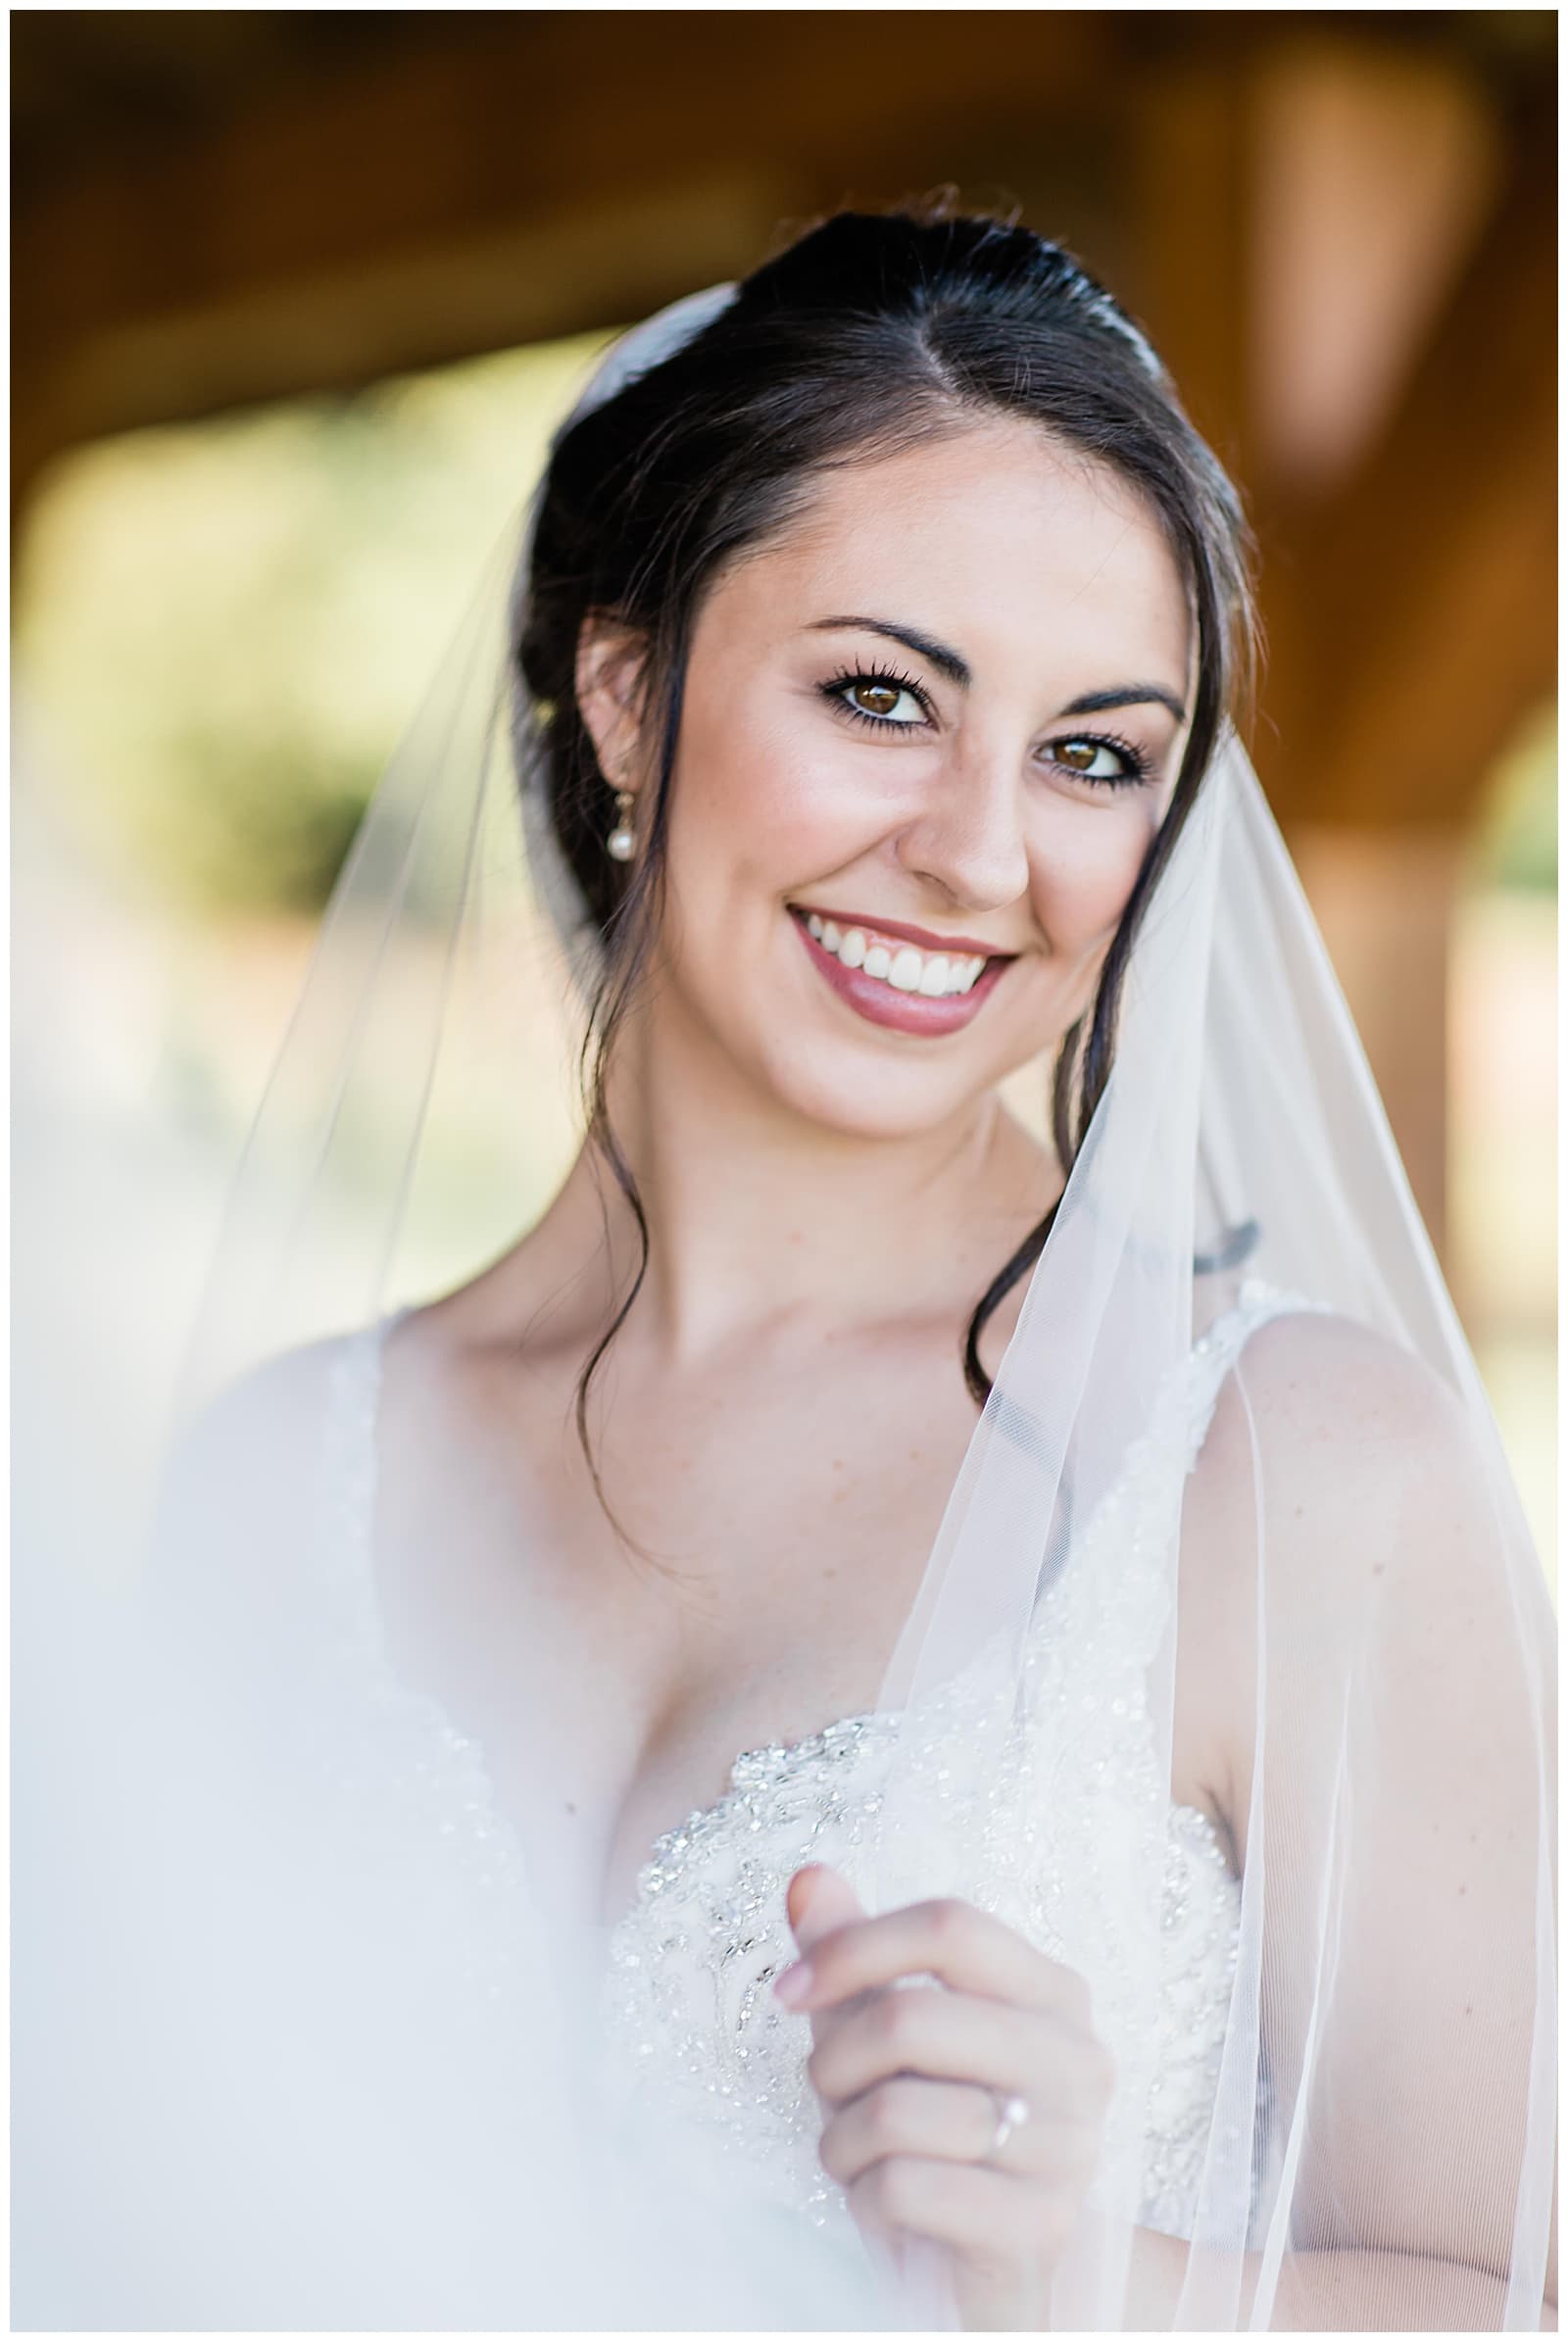 Danielle-Defayette-Photography-Middle-Fork-Barn-Abingdon-Wedding-2020_0007.jpg